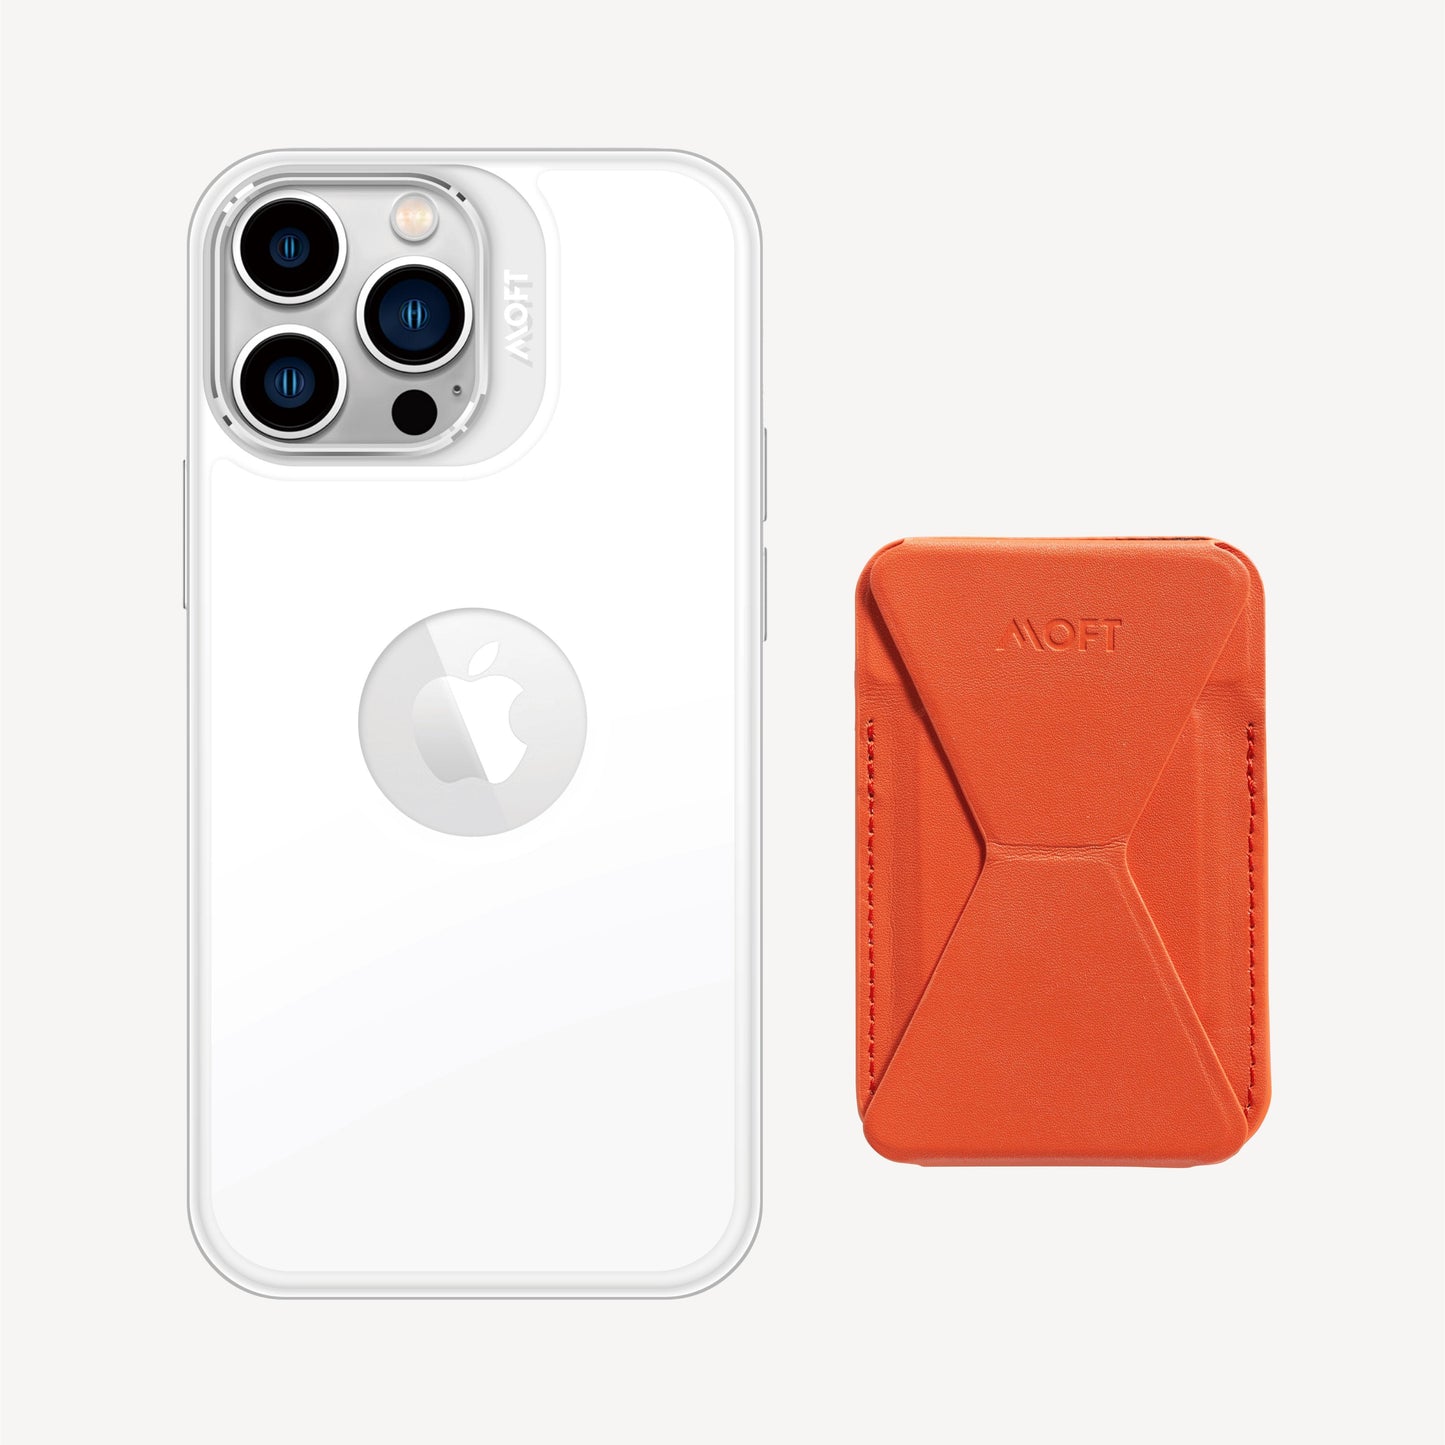 Case, Stand & Wallet Snap Set MD011-set Sunset Orange iPhone 12 Pro Max 